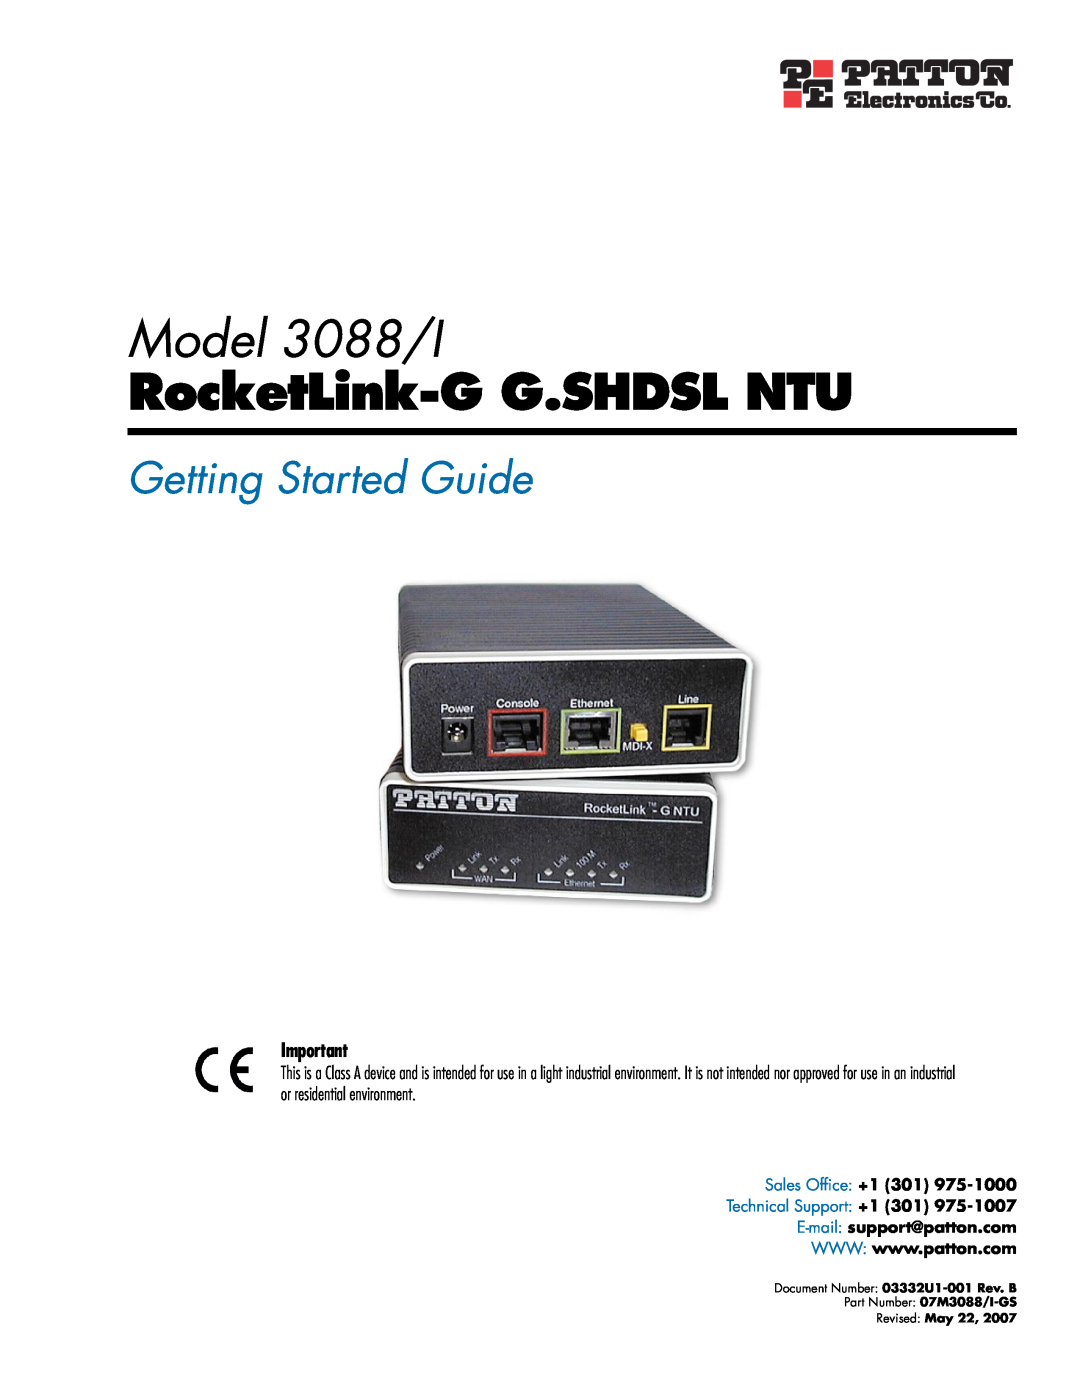 Patton electronic Model 3088/I manual RocketLink-G G.SHDSL NTU, Getting Started Guide, Sales Ofﬁce +1 301, Revised May 22 